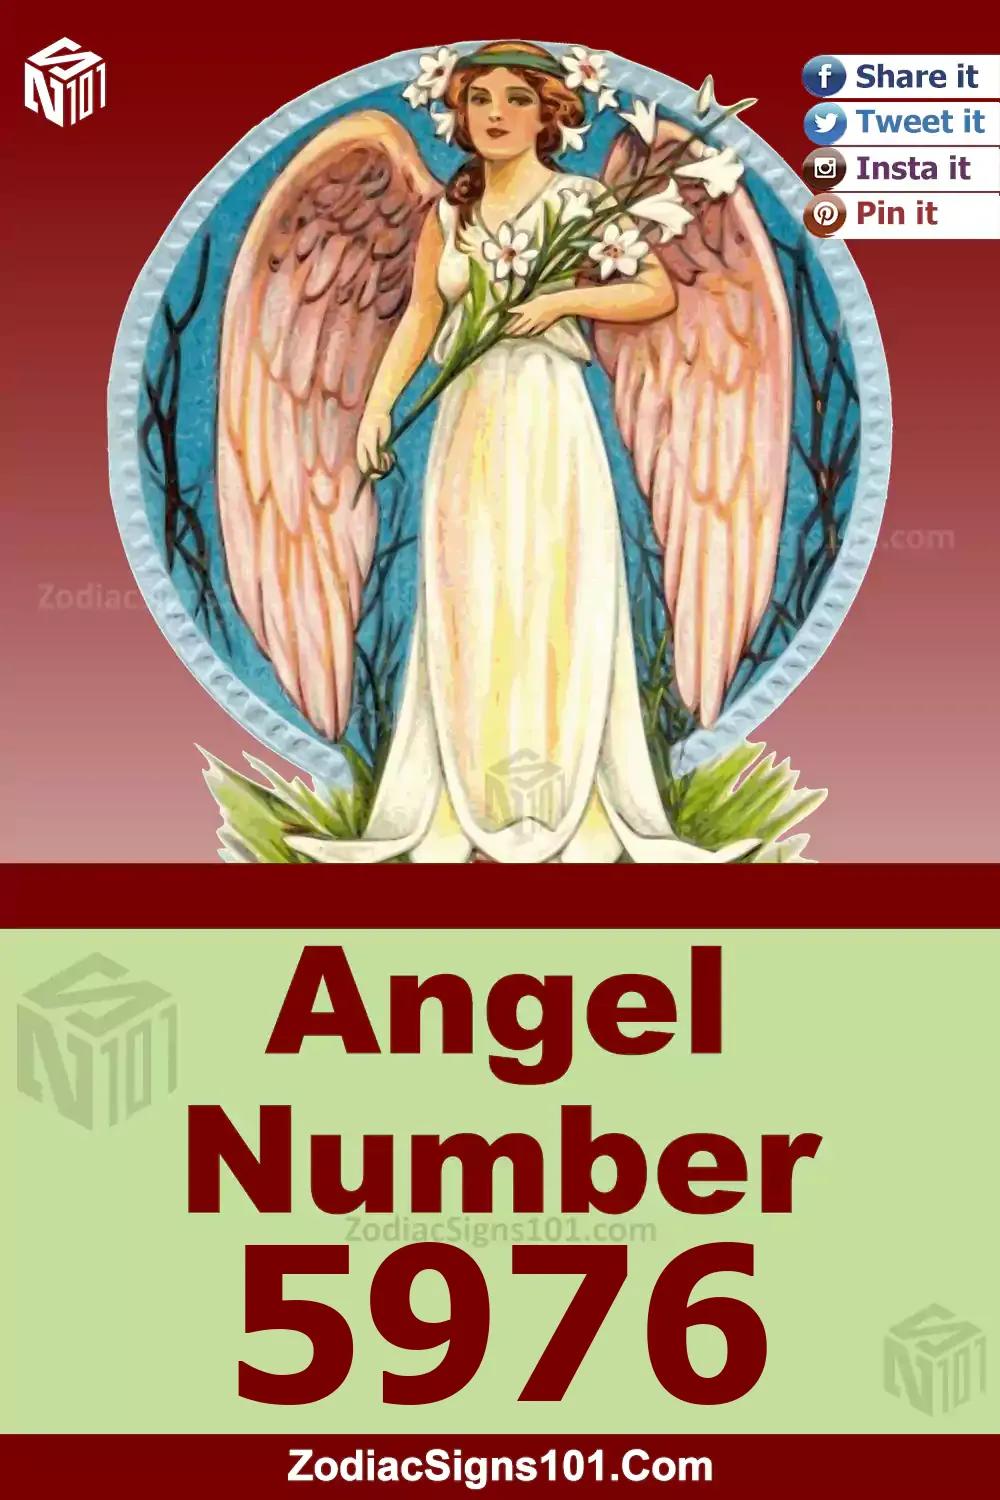 5976-Angel-Number-Meaning.jpg